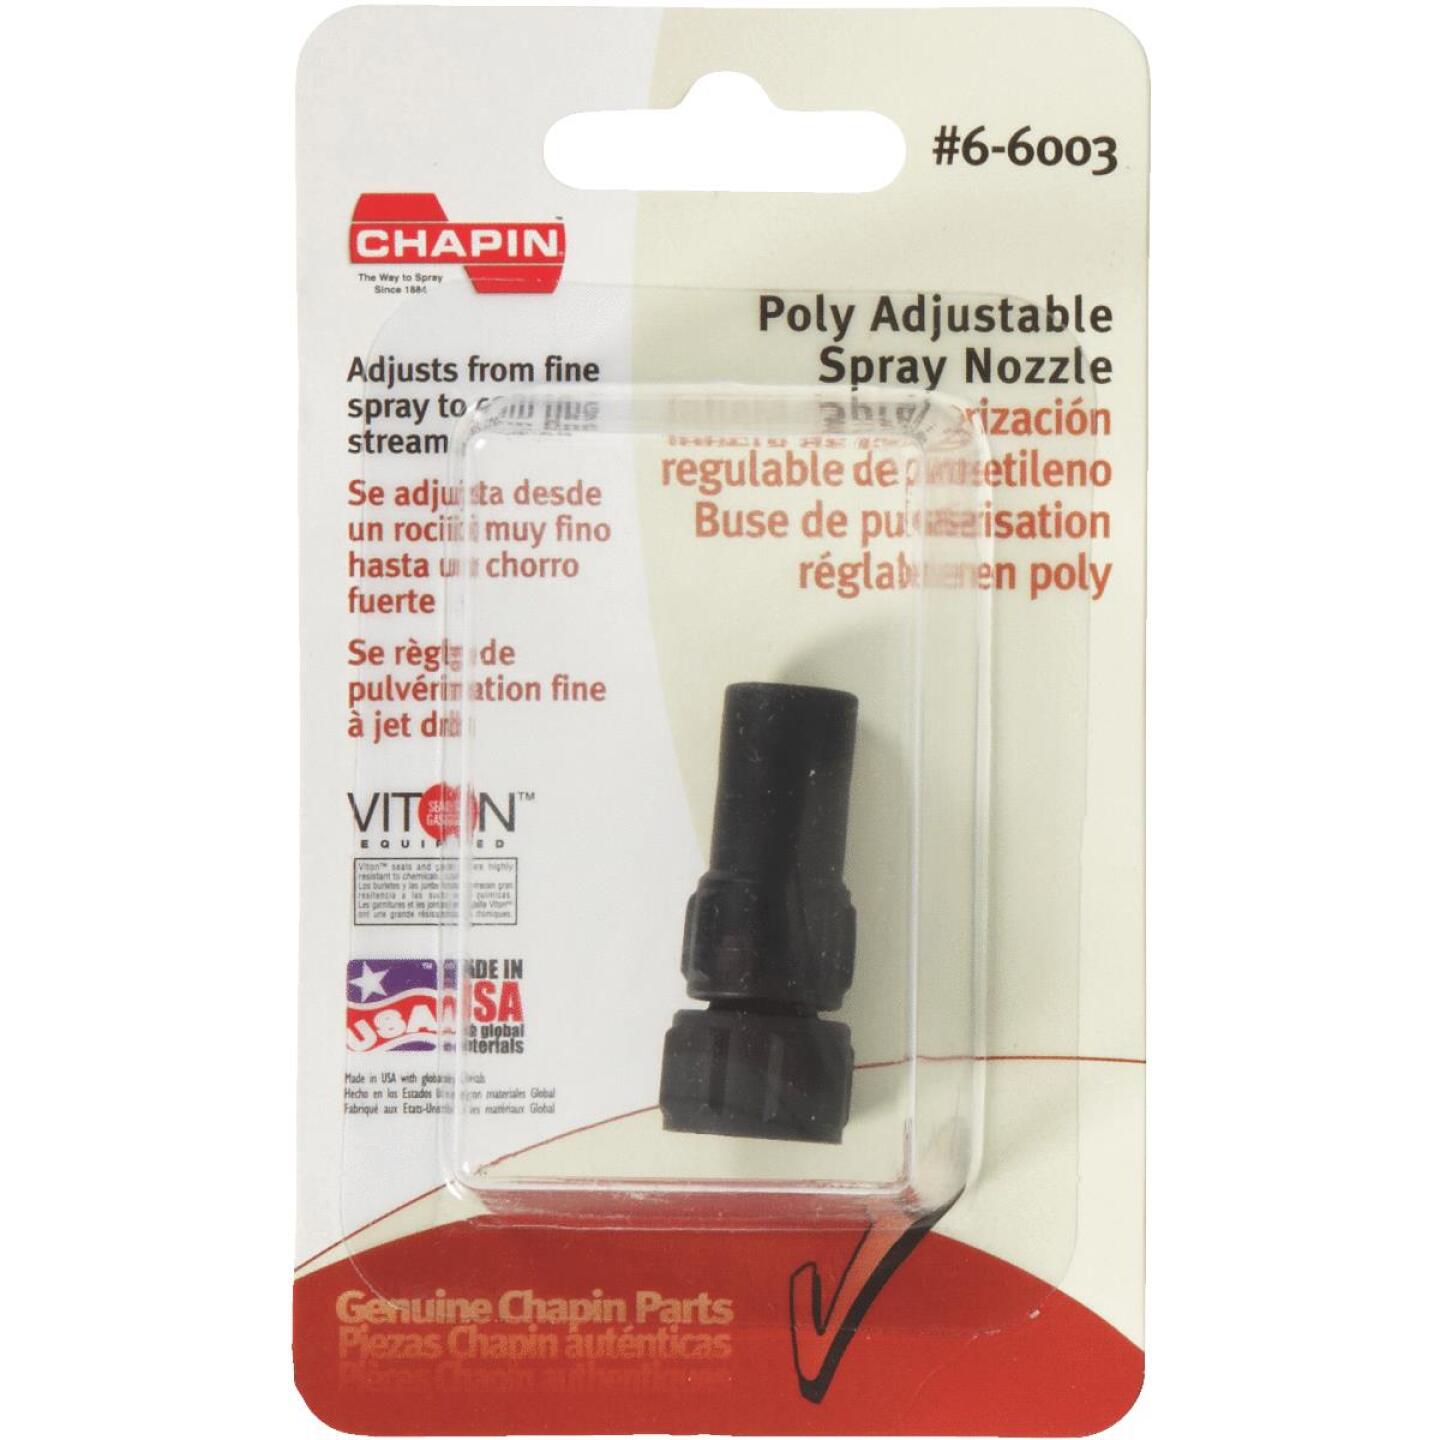 CHAPIN, Chapin Adjustable Poly Nozzle